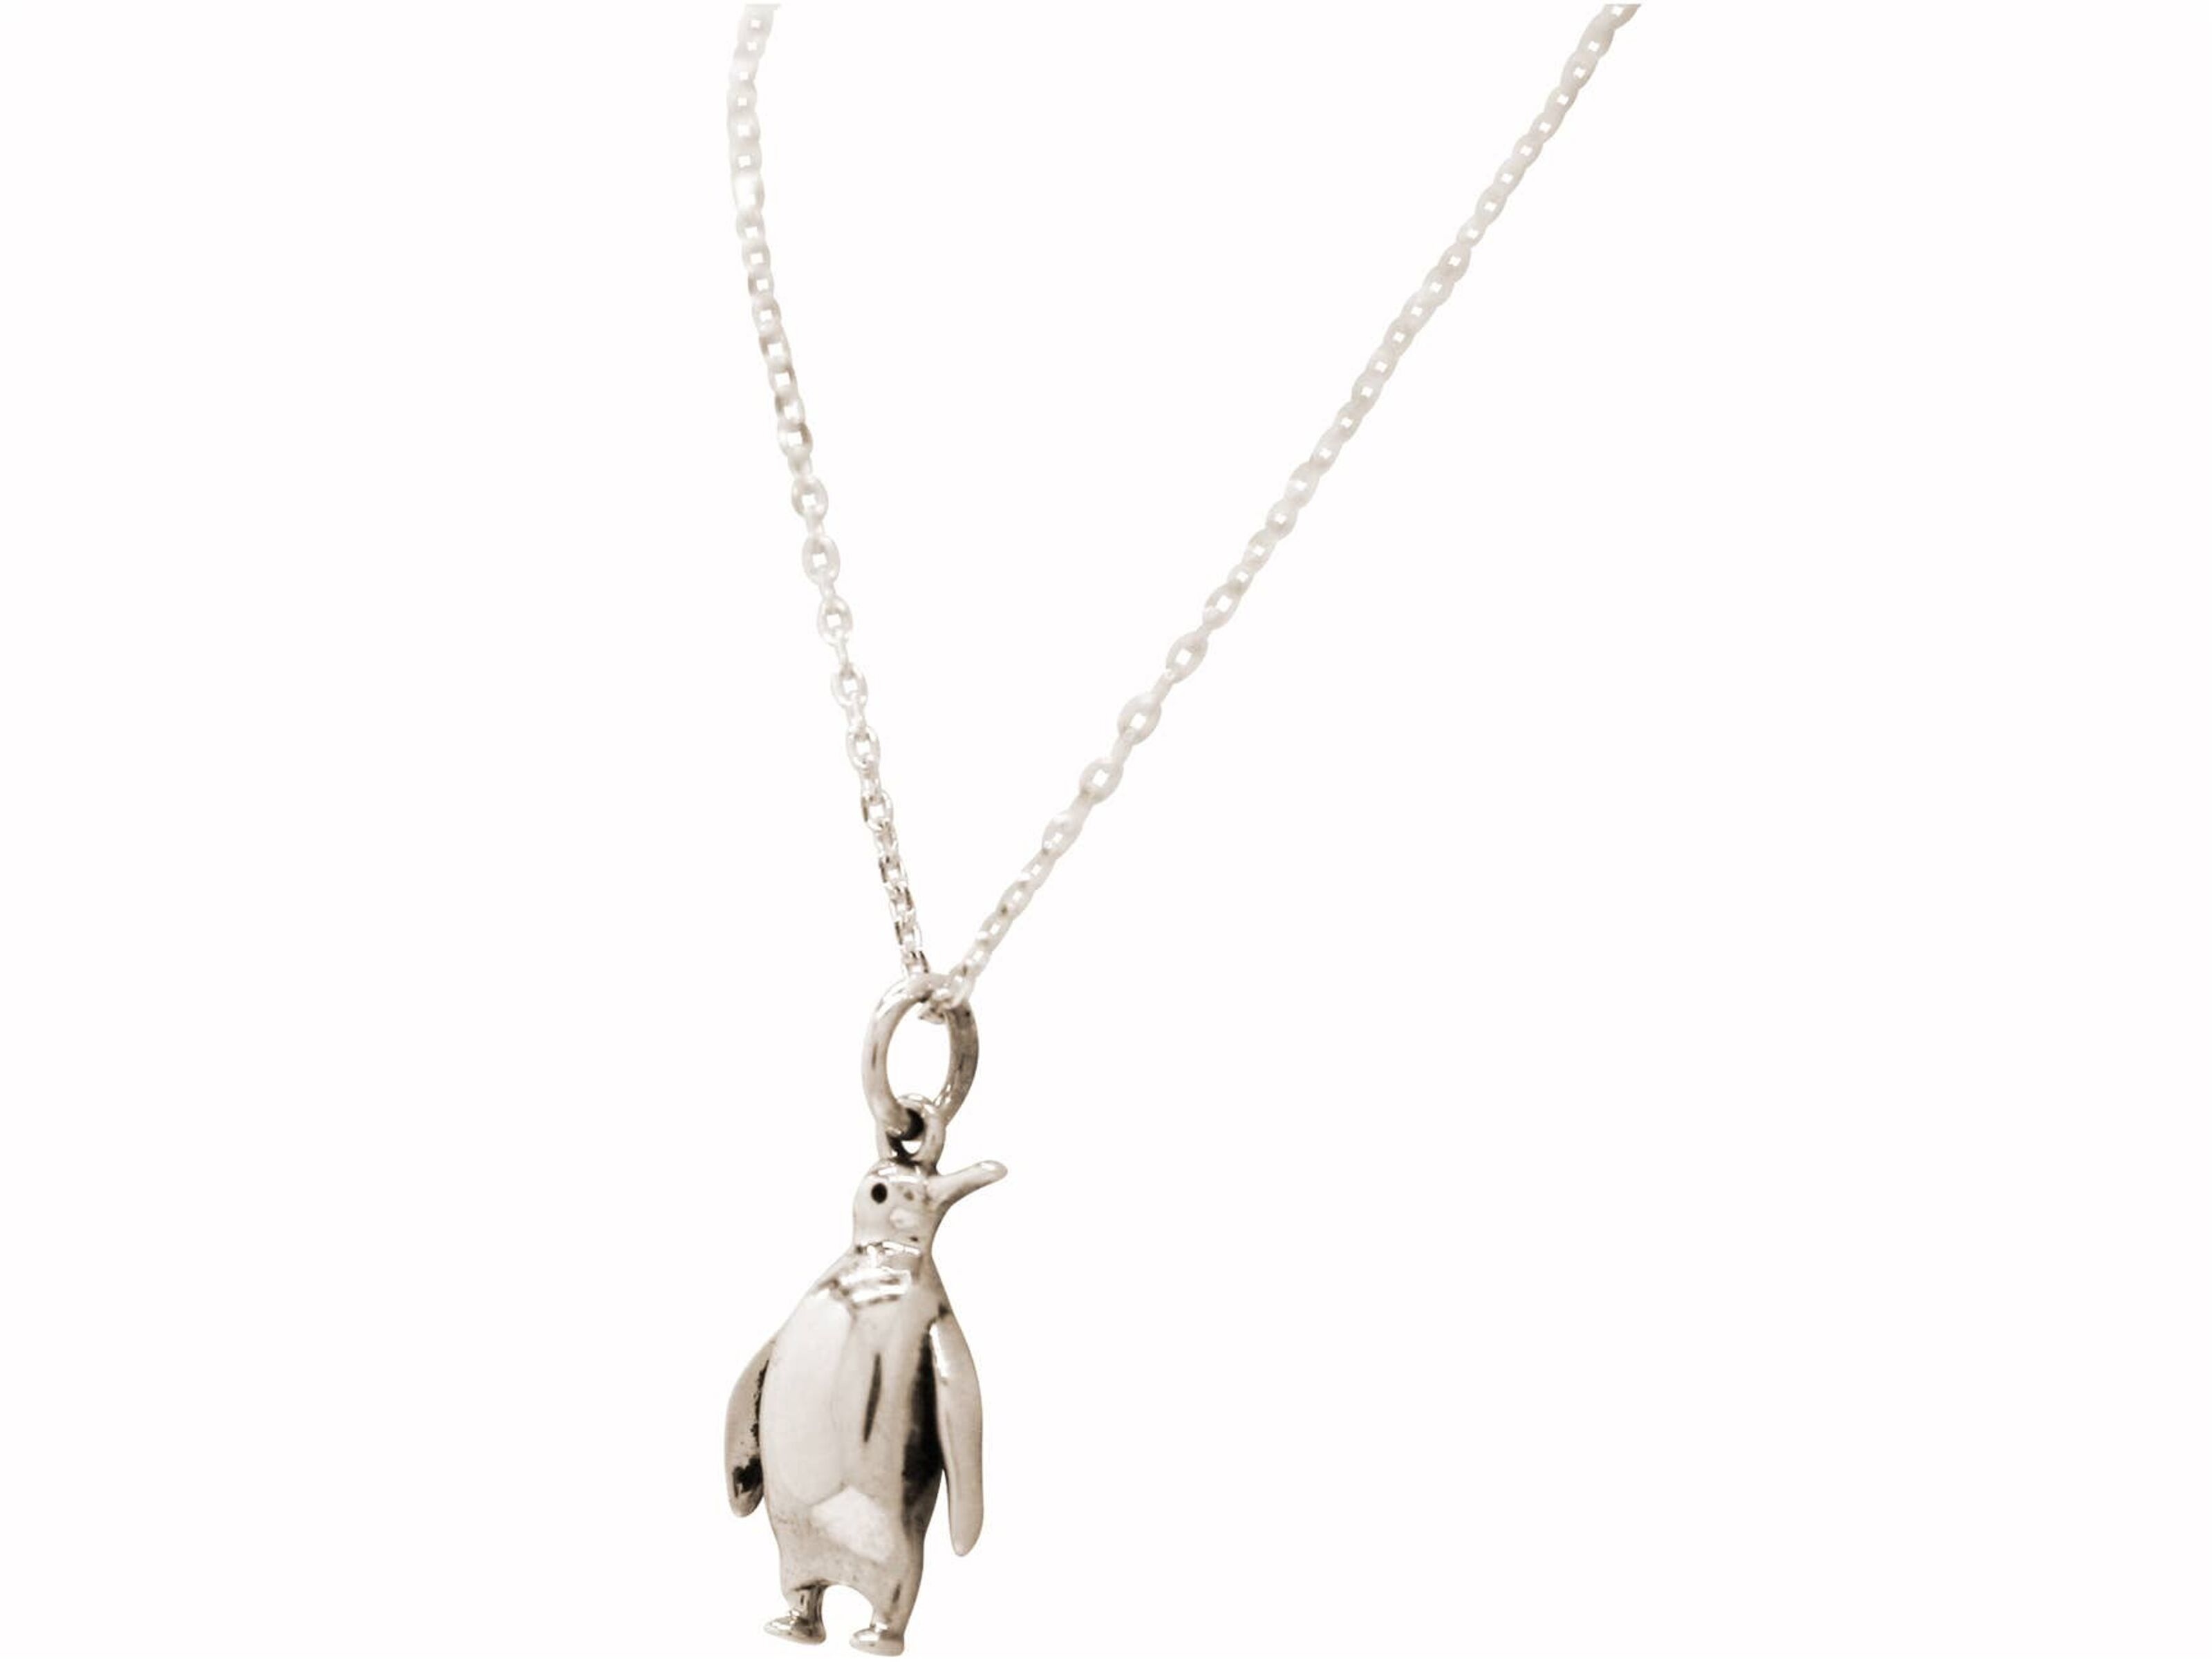 Gemshine necklace Buy pendant penguin 3-D wholesale with silver 925